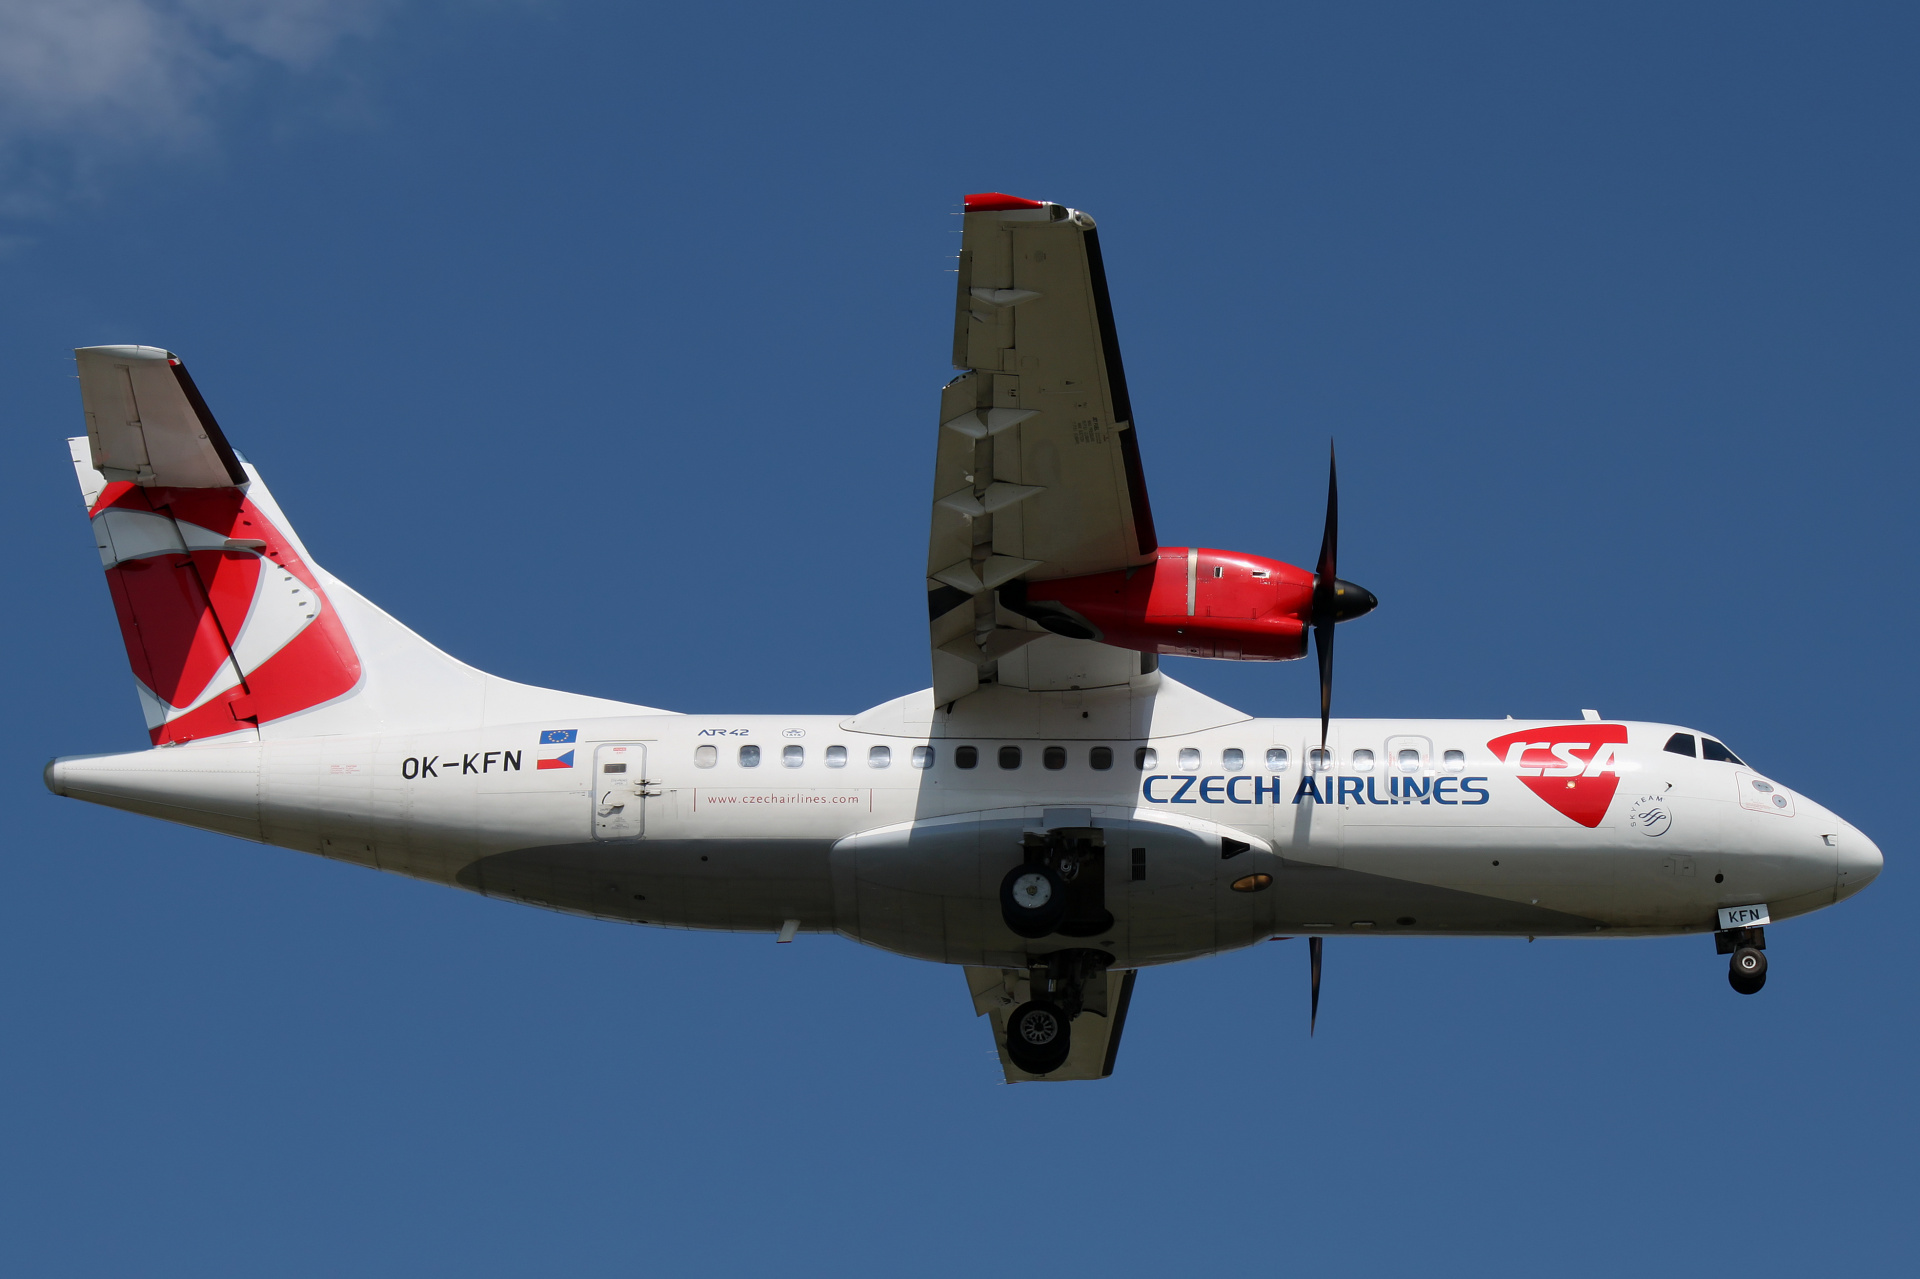 OK-KFN (new livery) (Aircraft » EPWA Spotting » ATR 42 » CSA Czech Airlines)